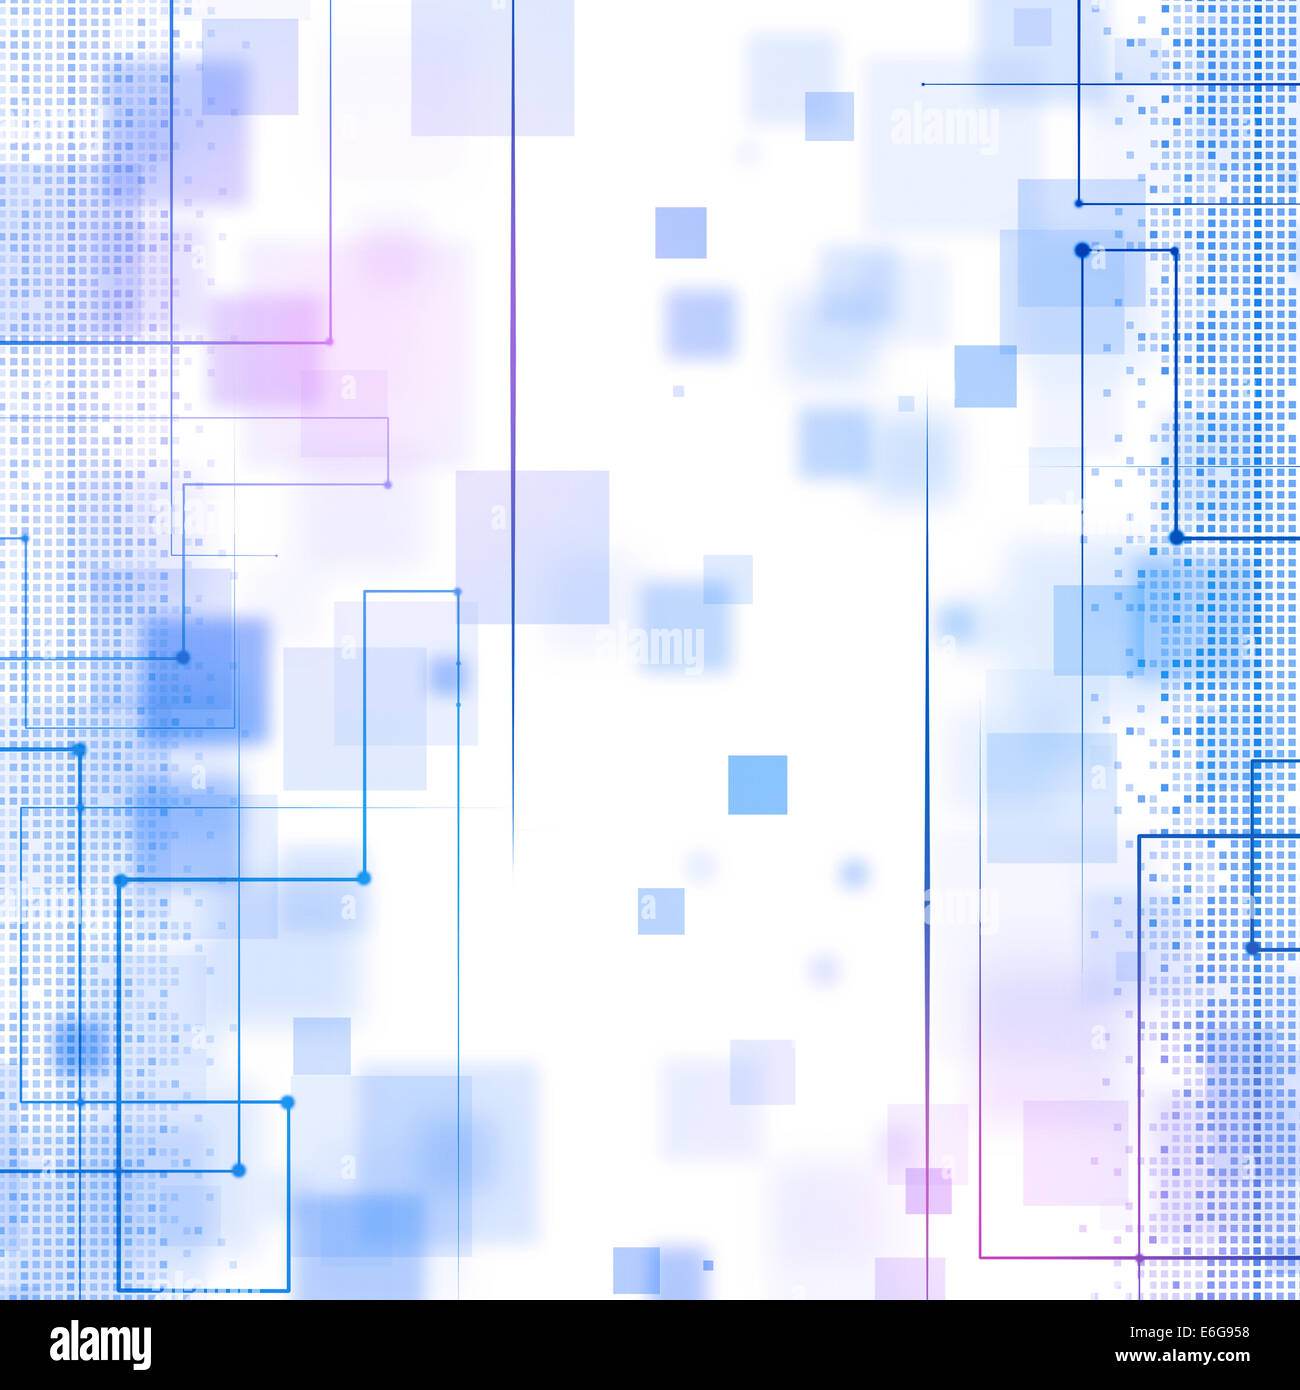 Abstract technology business punti quadrati e luci sfondo blu Foto Stock